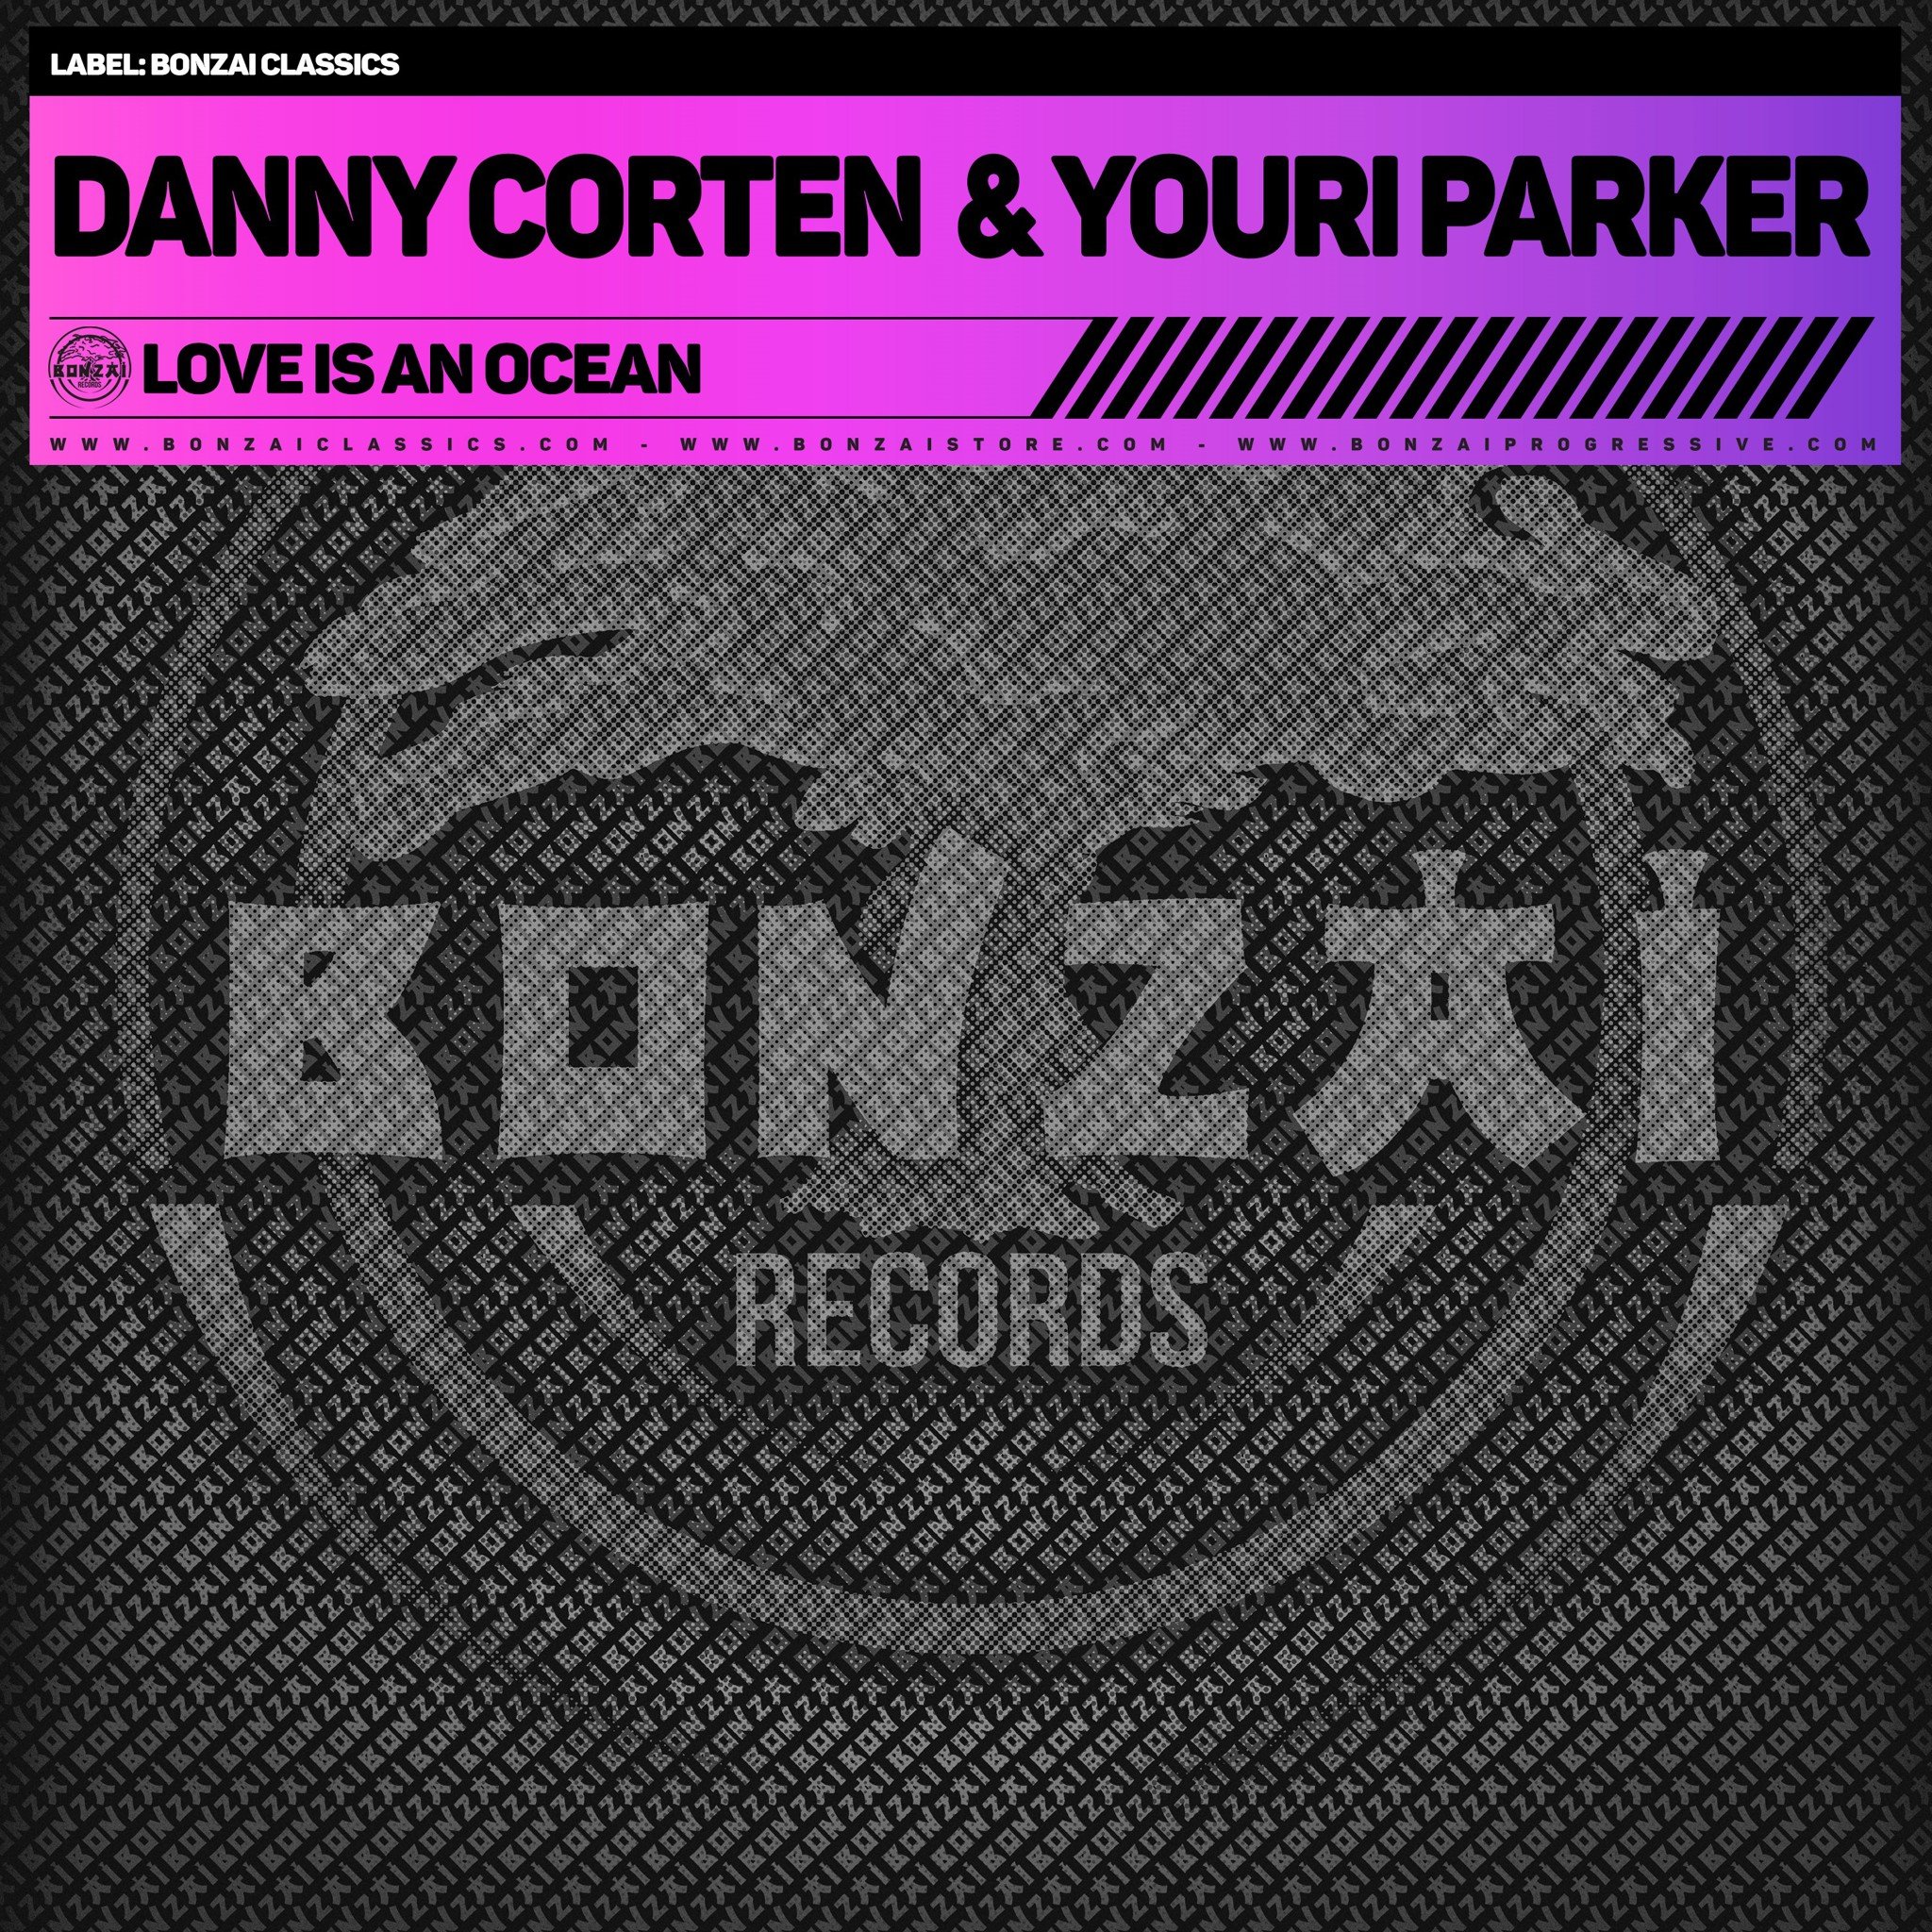 Danny Corten & Youri Parker - Love Is An Ocean (Bonzai Classics) (MV)